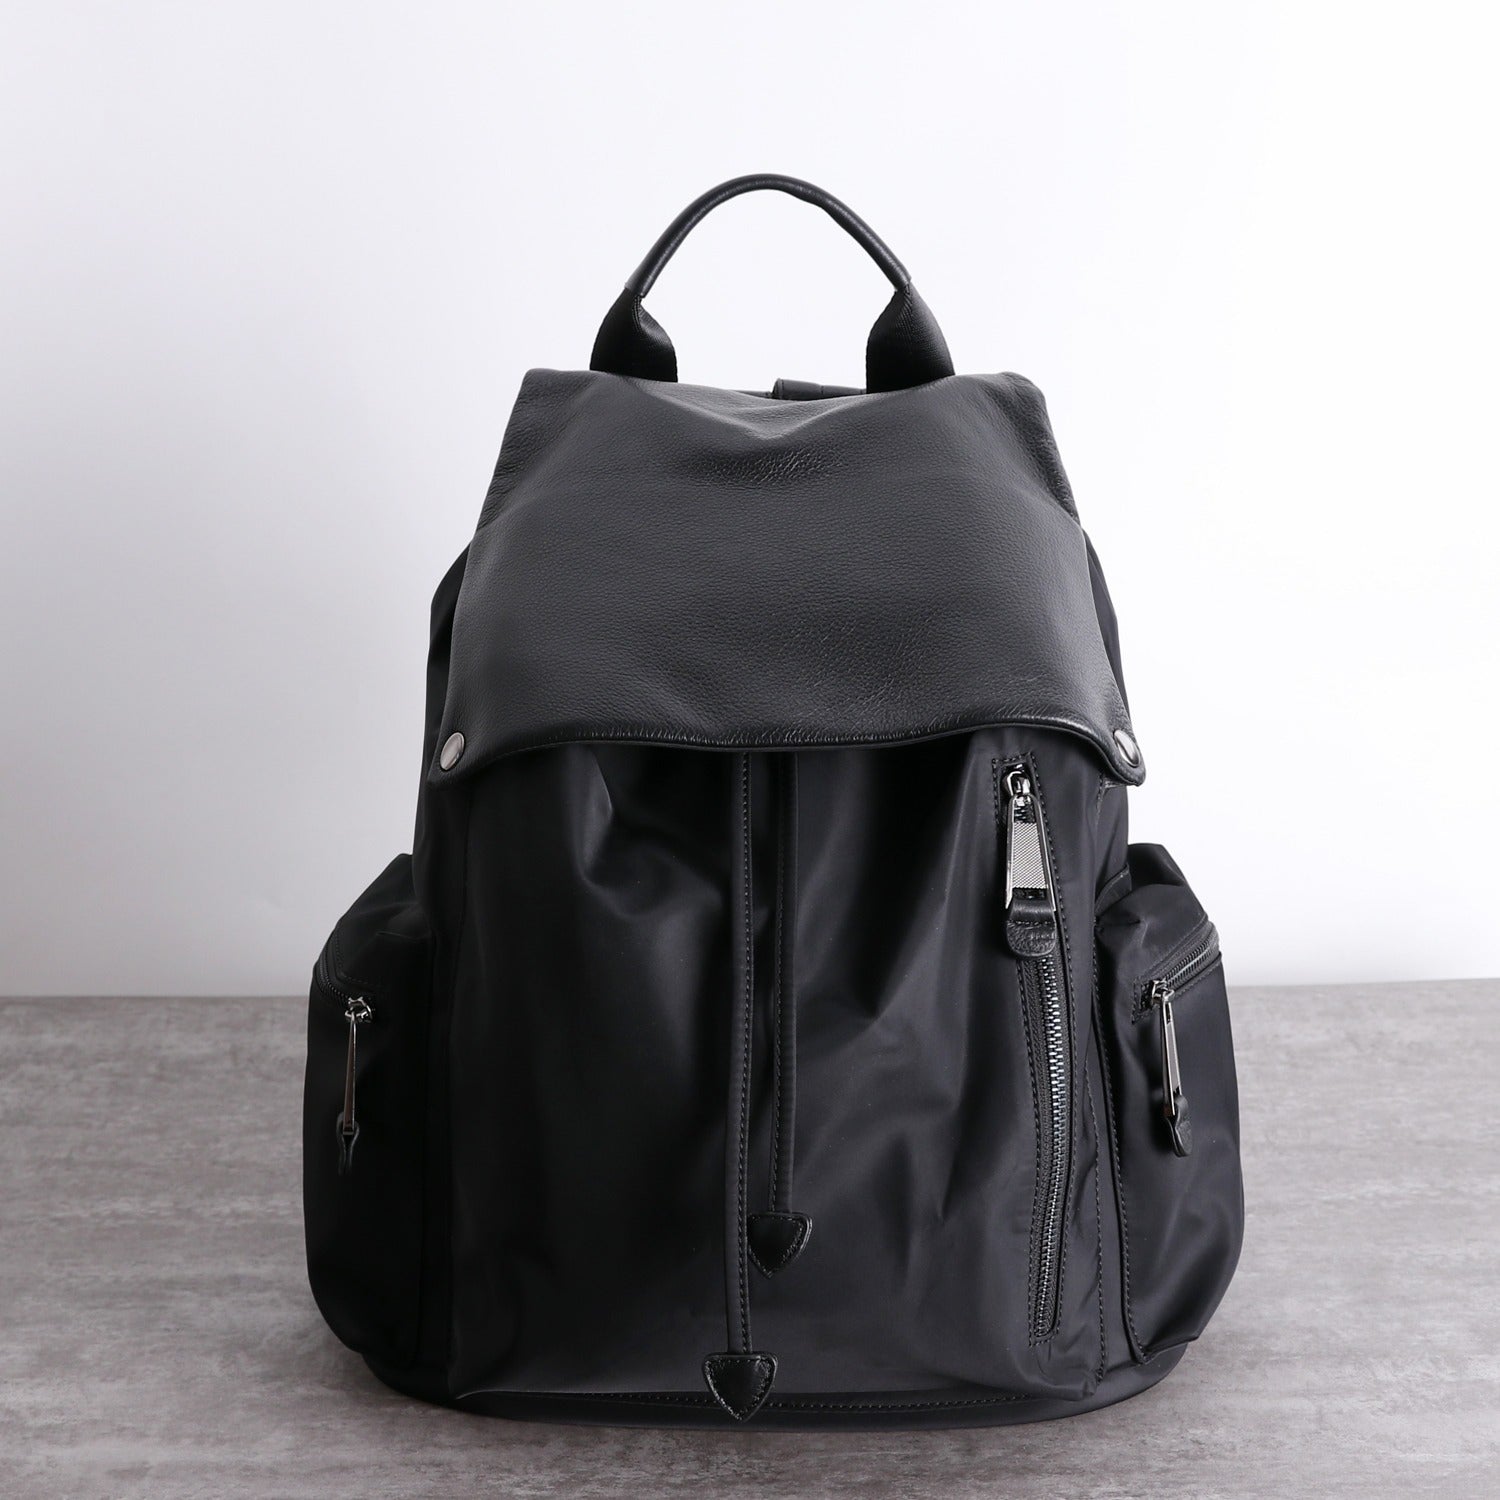 Cute Black Nylon Satchel Backpack Womens School Backpack Purse Black Nylon Leather Travel Rucksack for Ladies